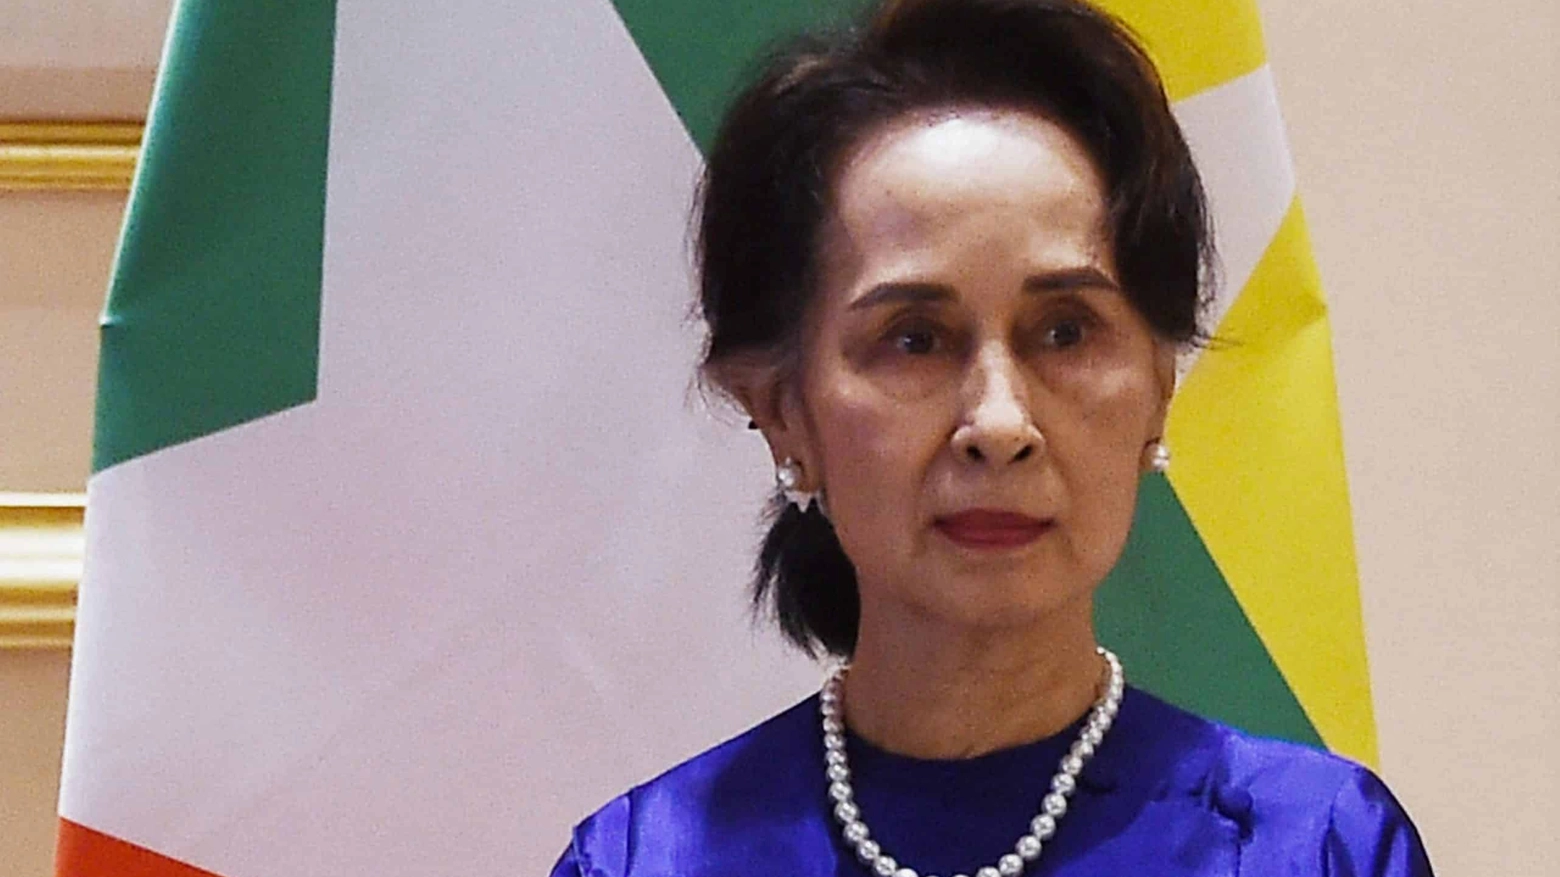 ++ Aung San Suu Kyi uscita dalla prigione ++